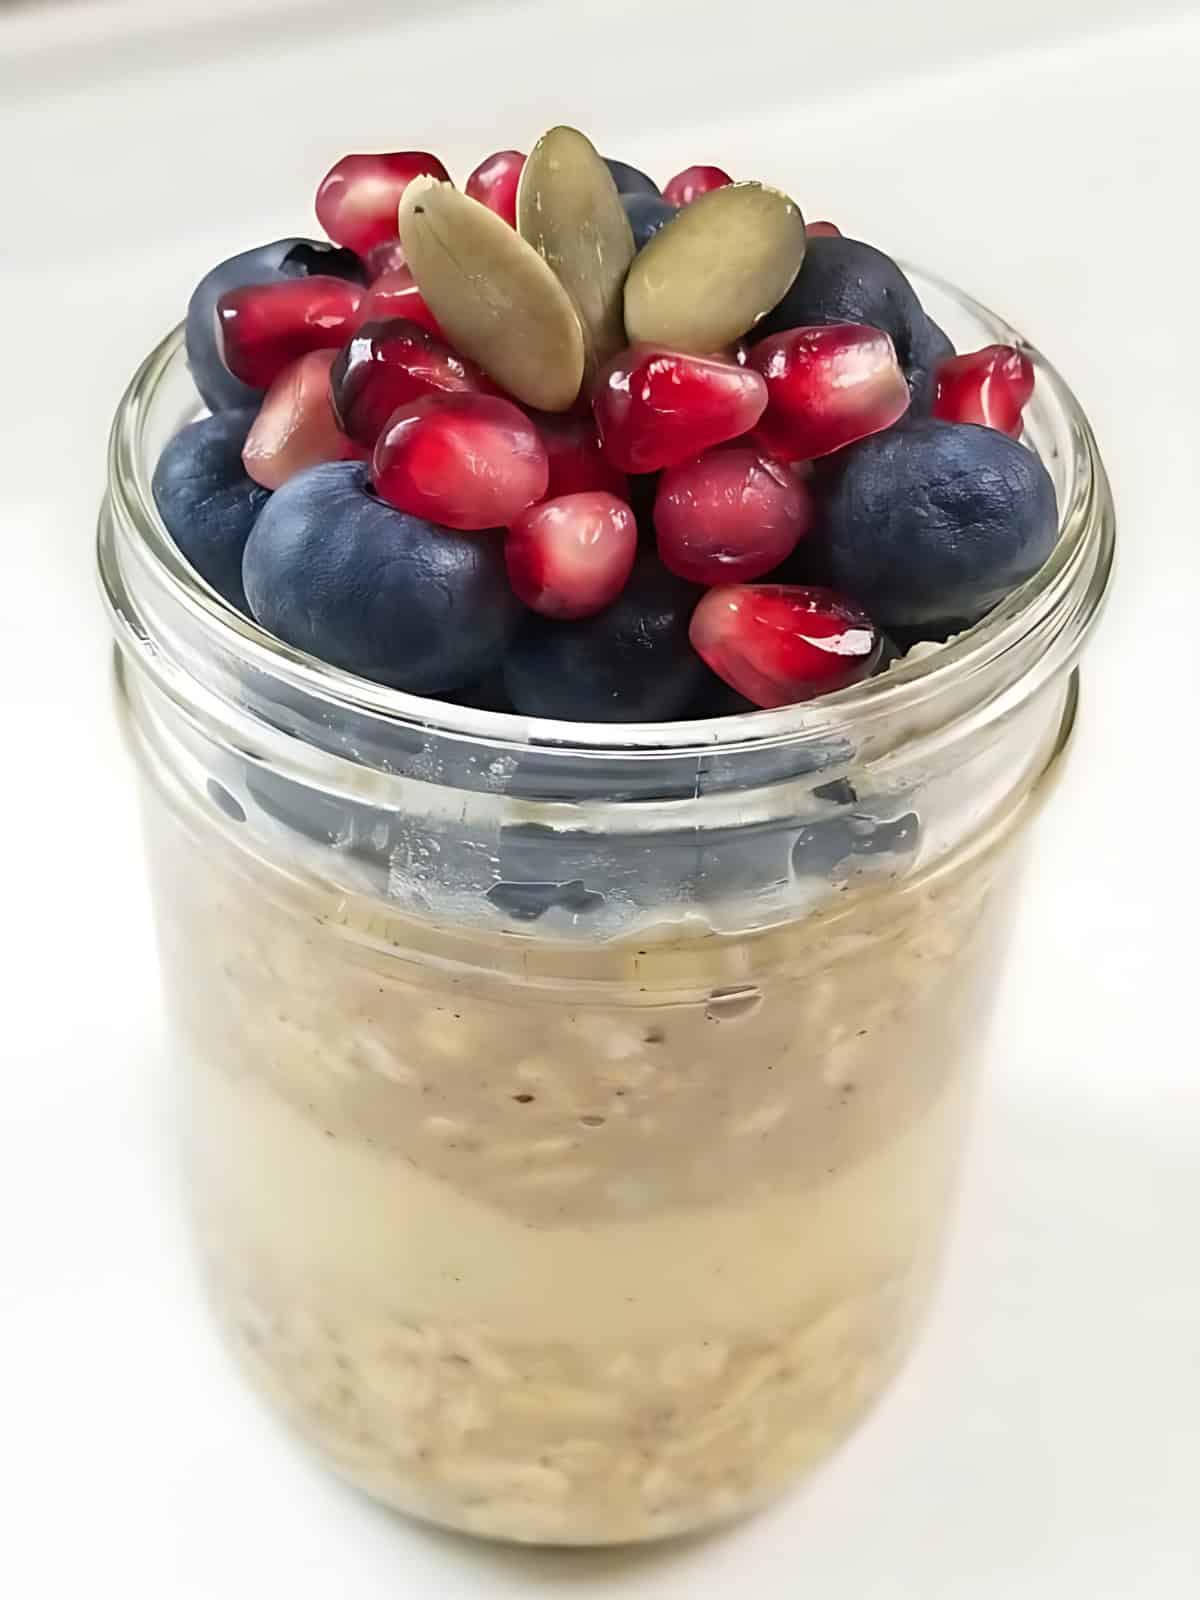 Vegan overnight oats in a glass jar.